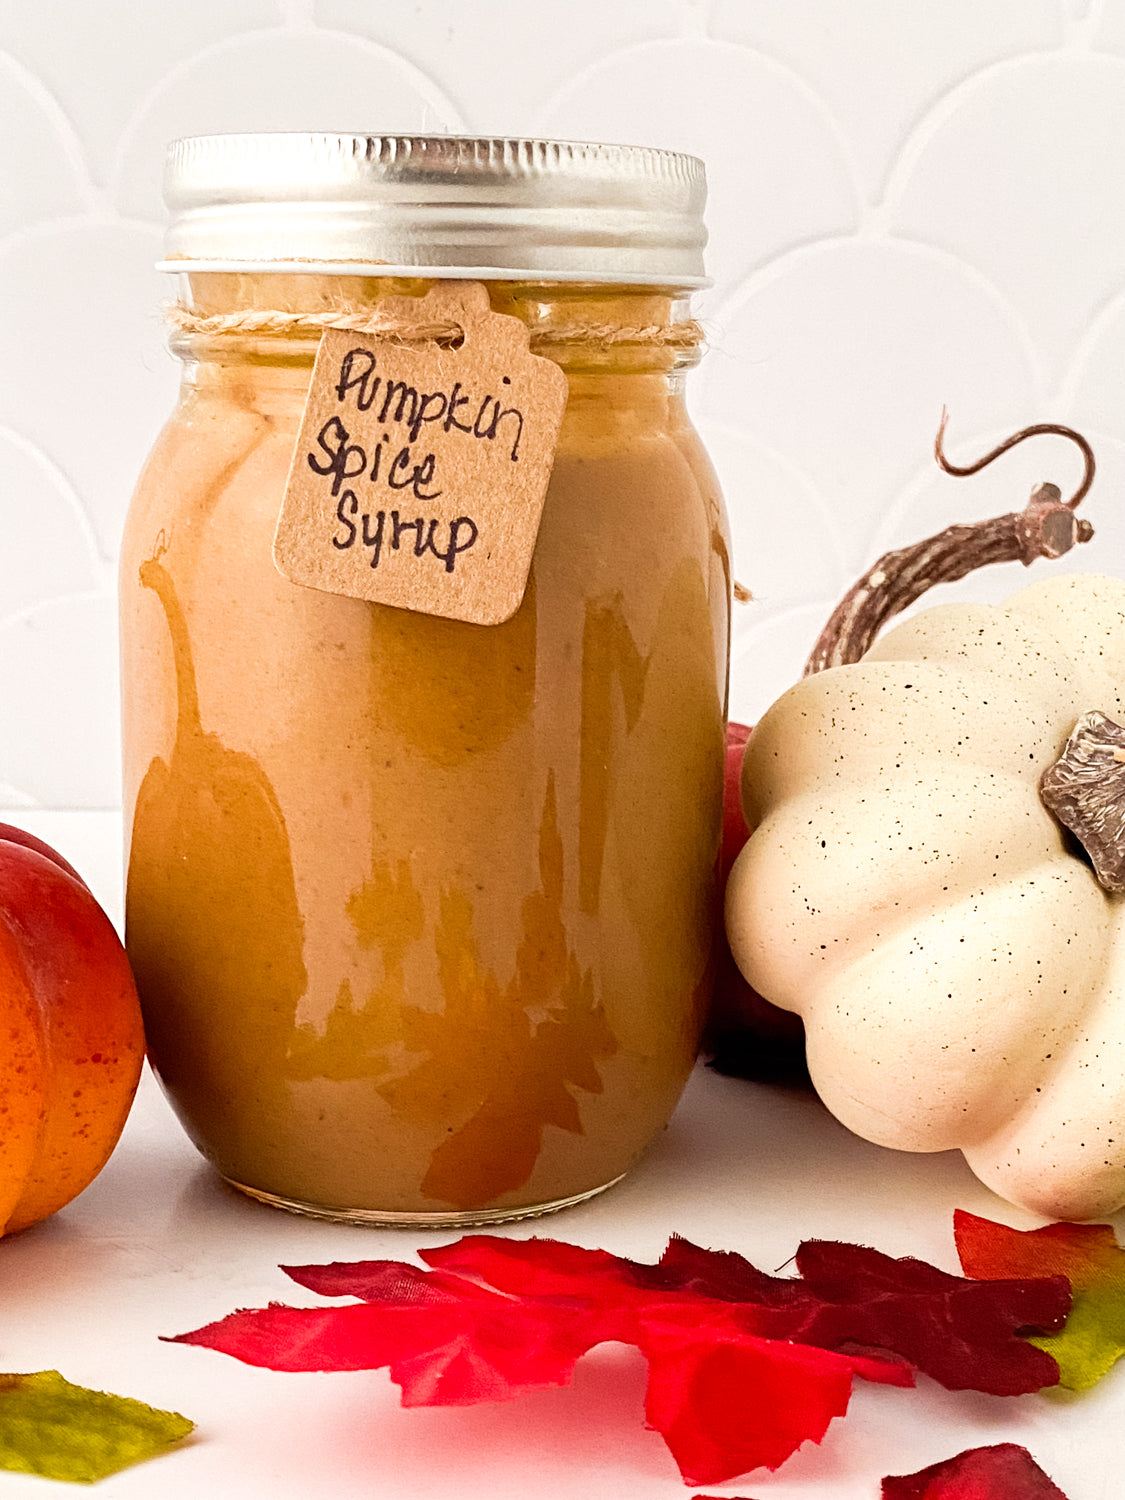 PLR - Pumpkin Spice Syrup